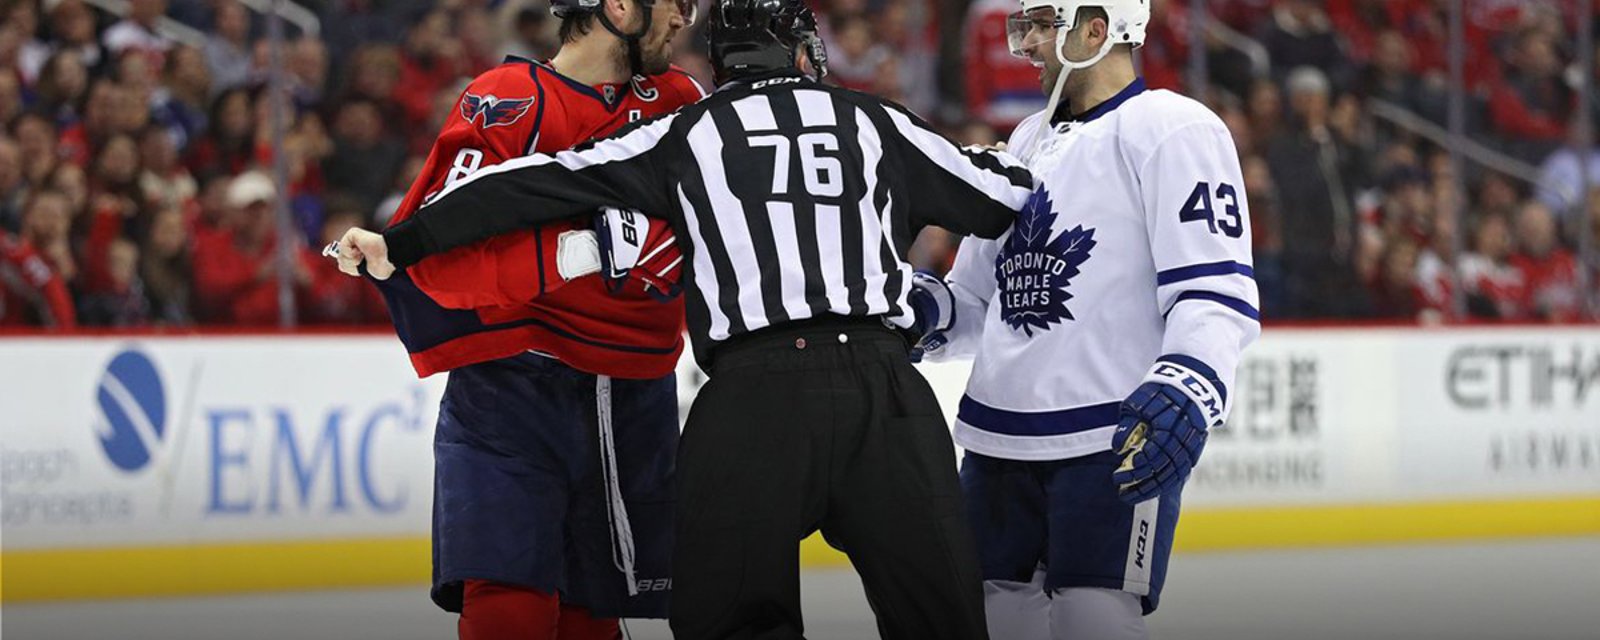 Leafs’ Kadri praises Ovechkin ahead of playoff rematch